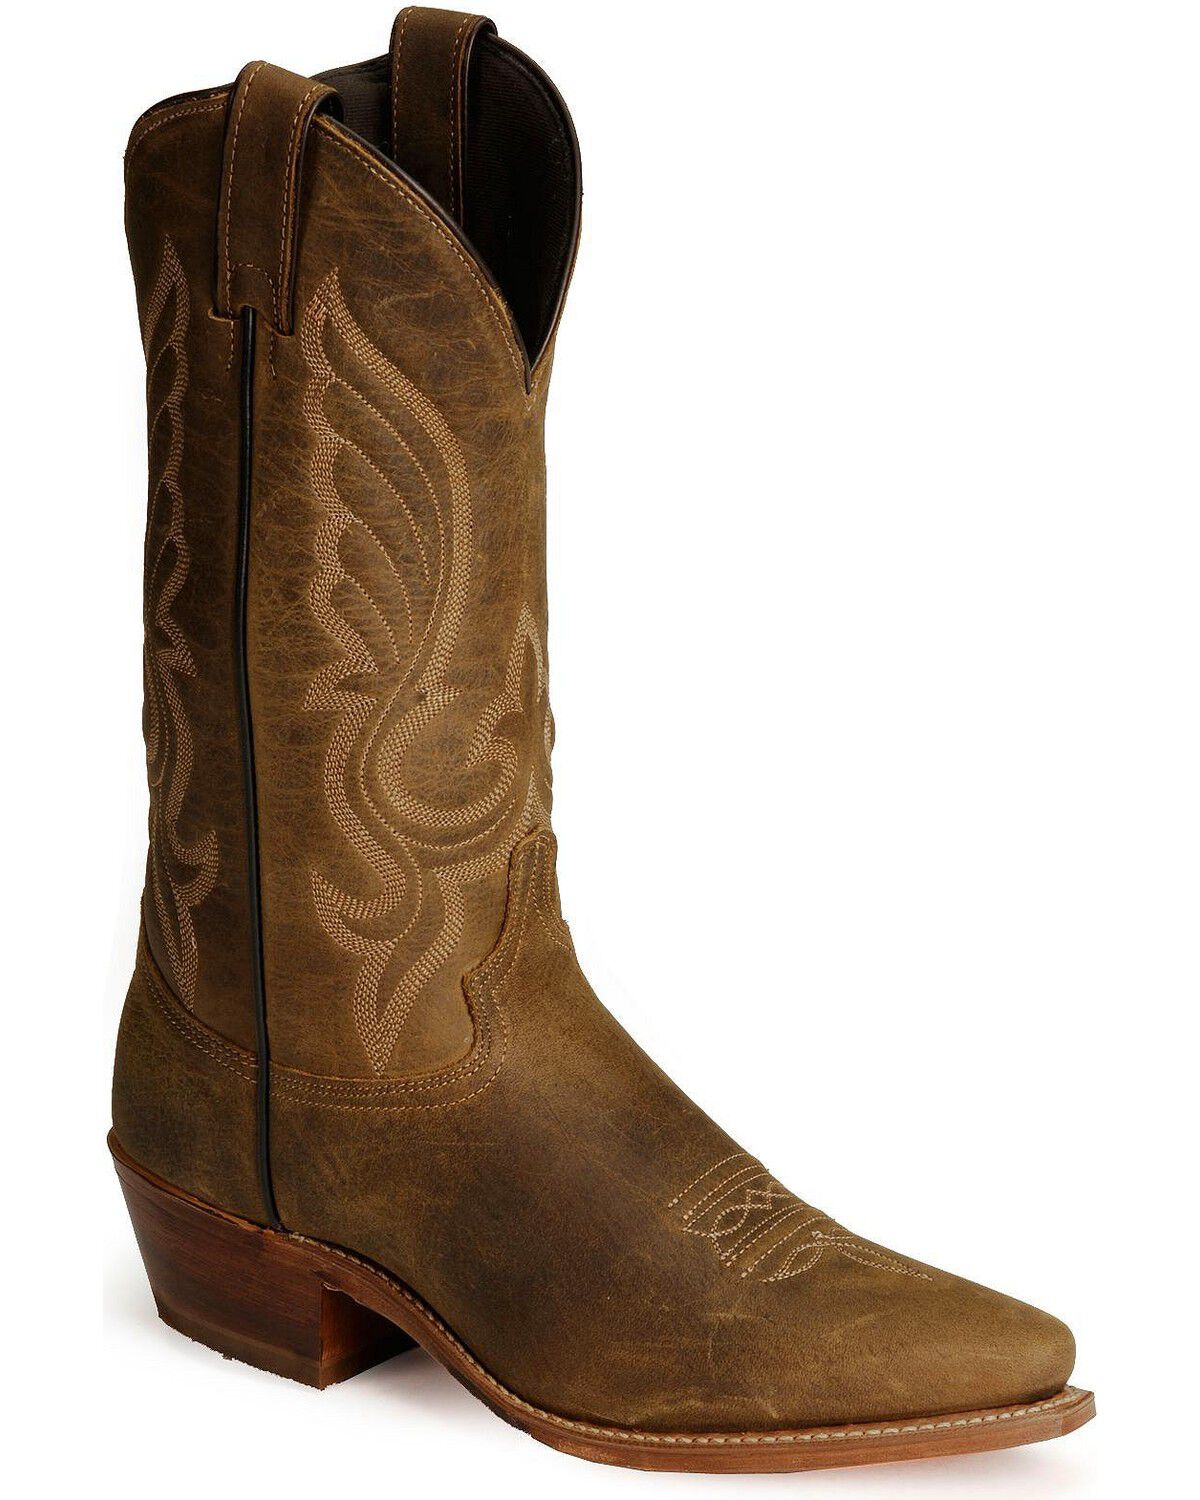 size 14 mens cowboy boots